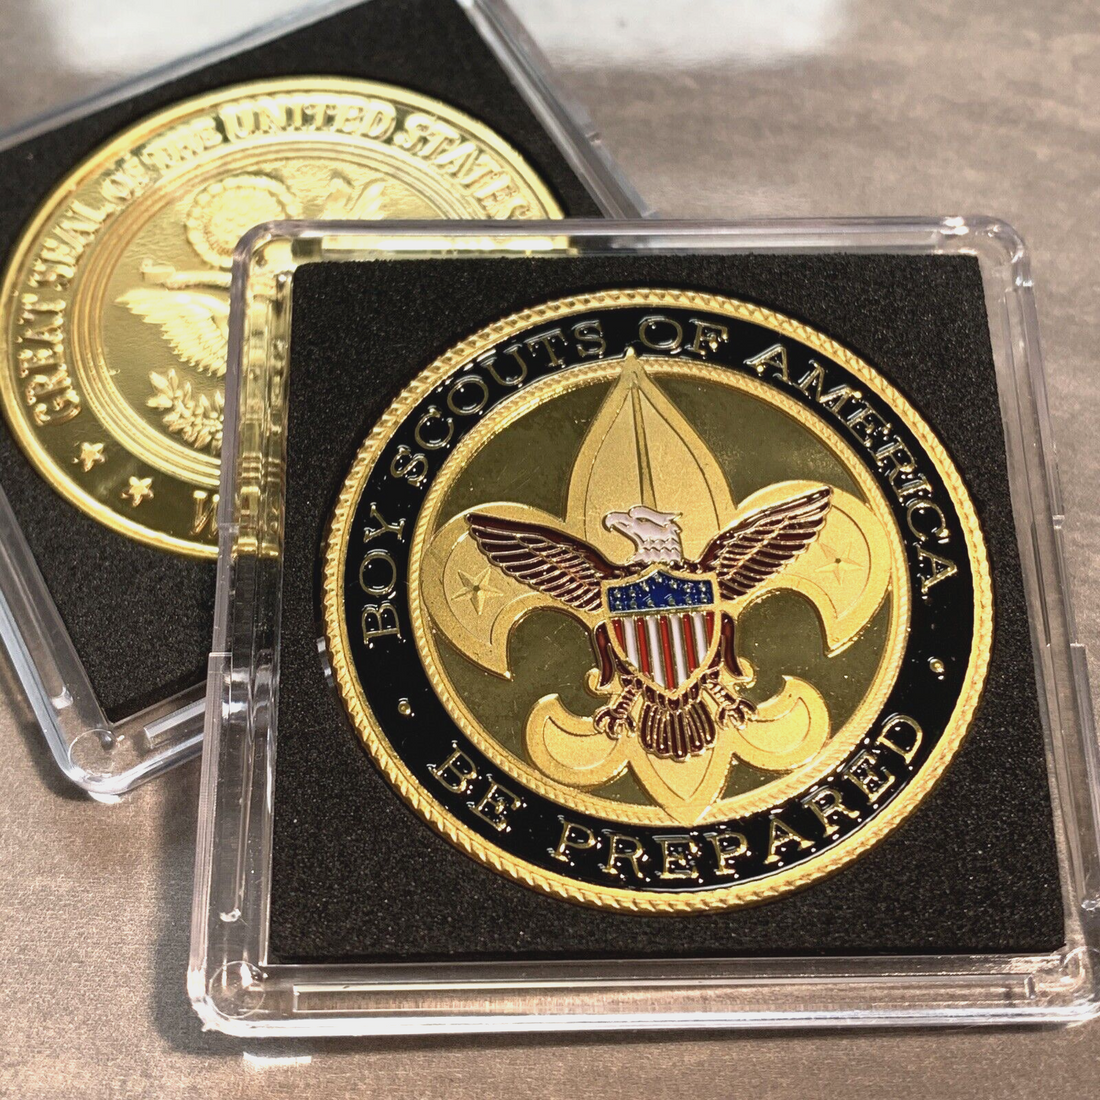 NEW eBay Listing! Boy Scouts Commemorative Coin